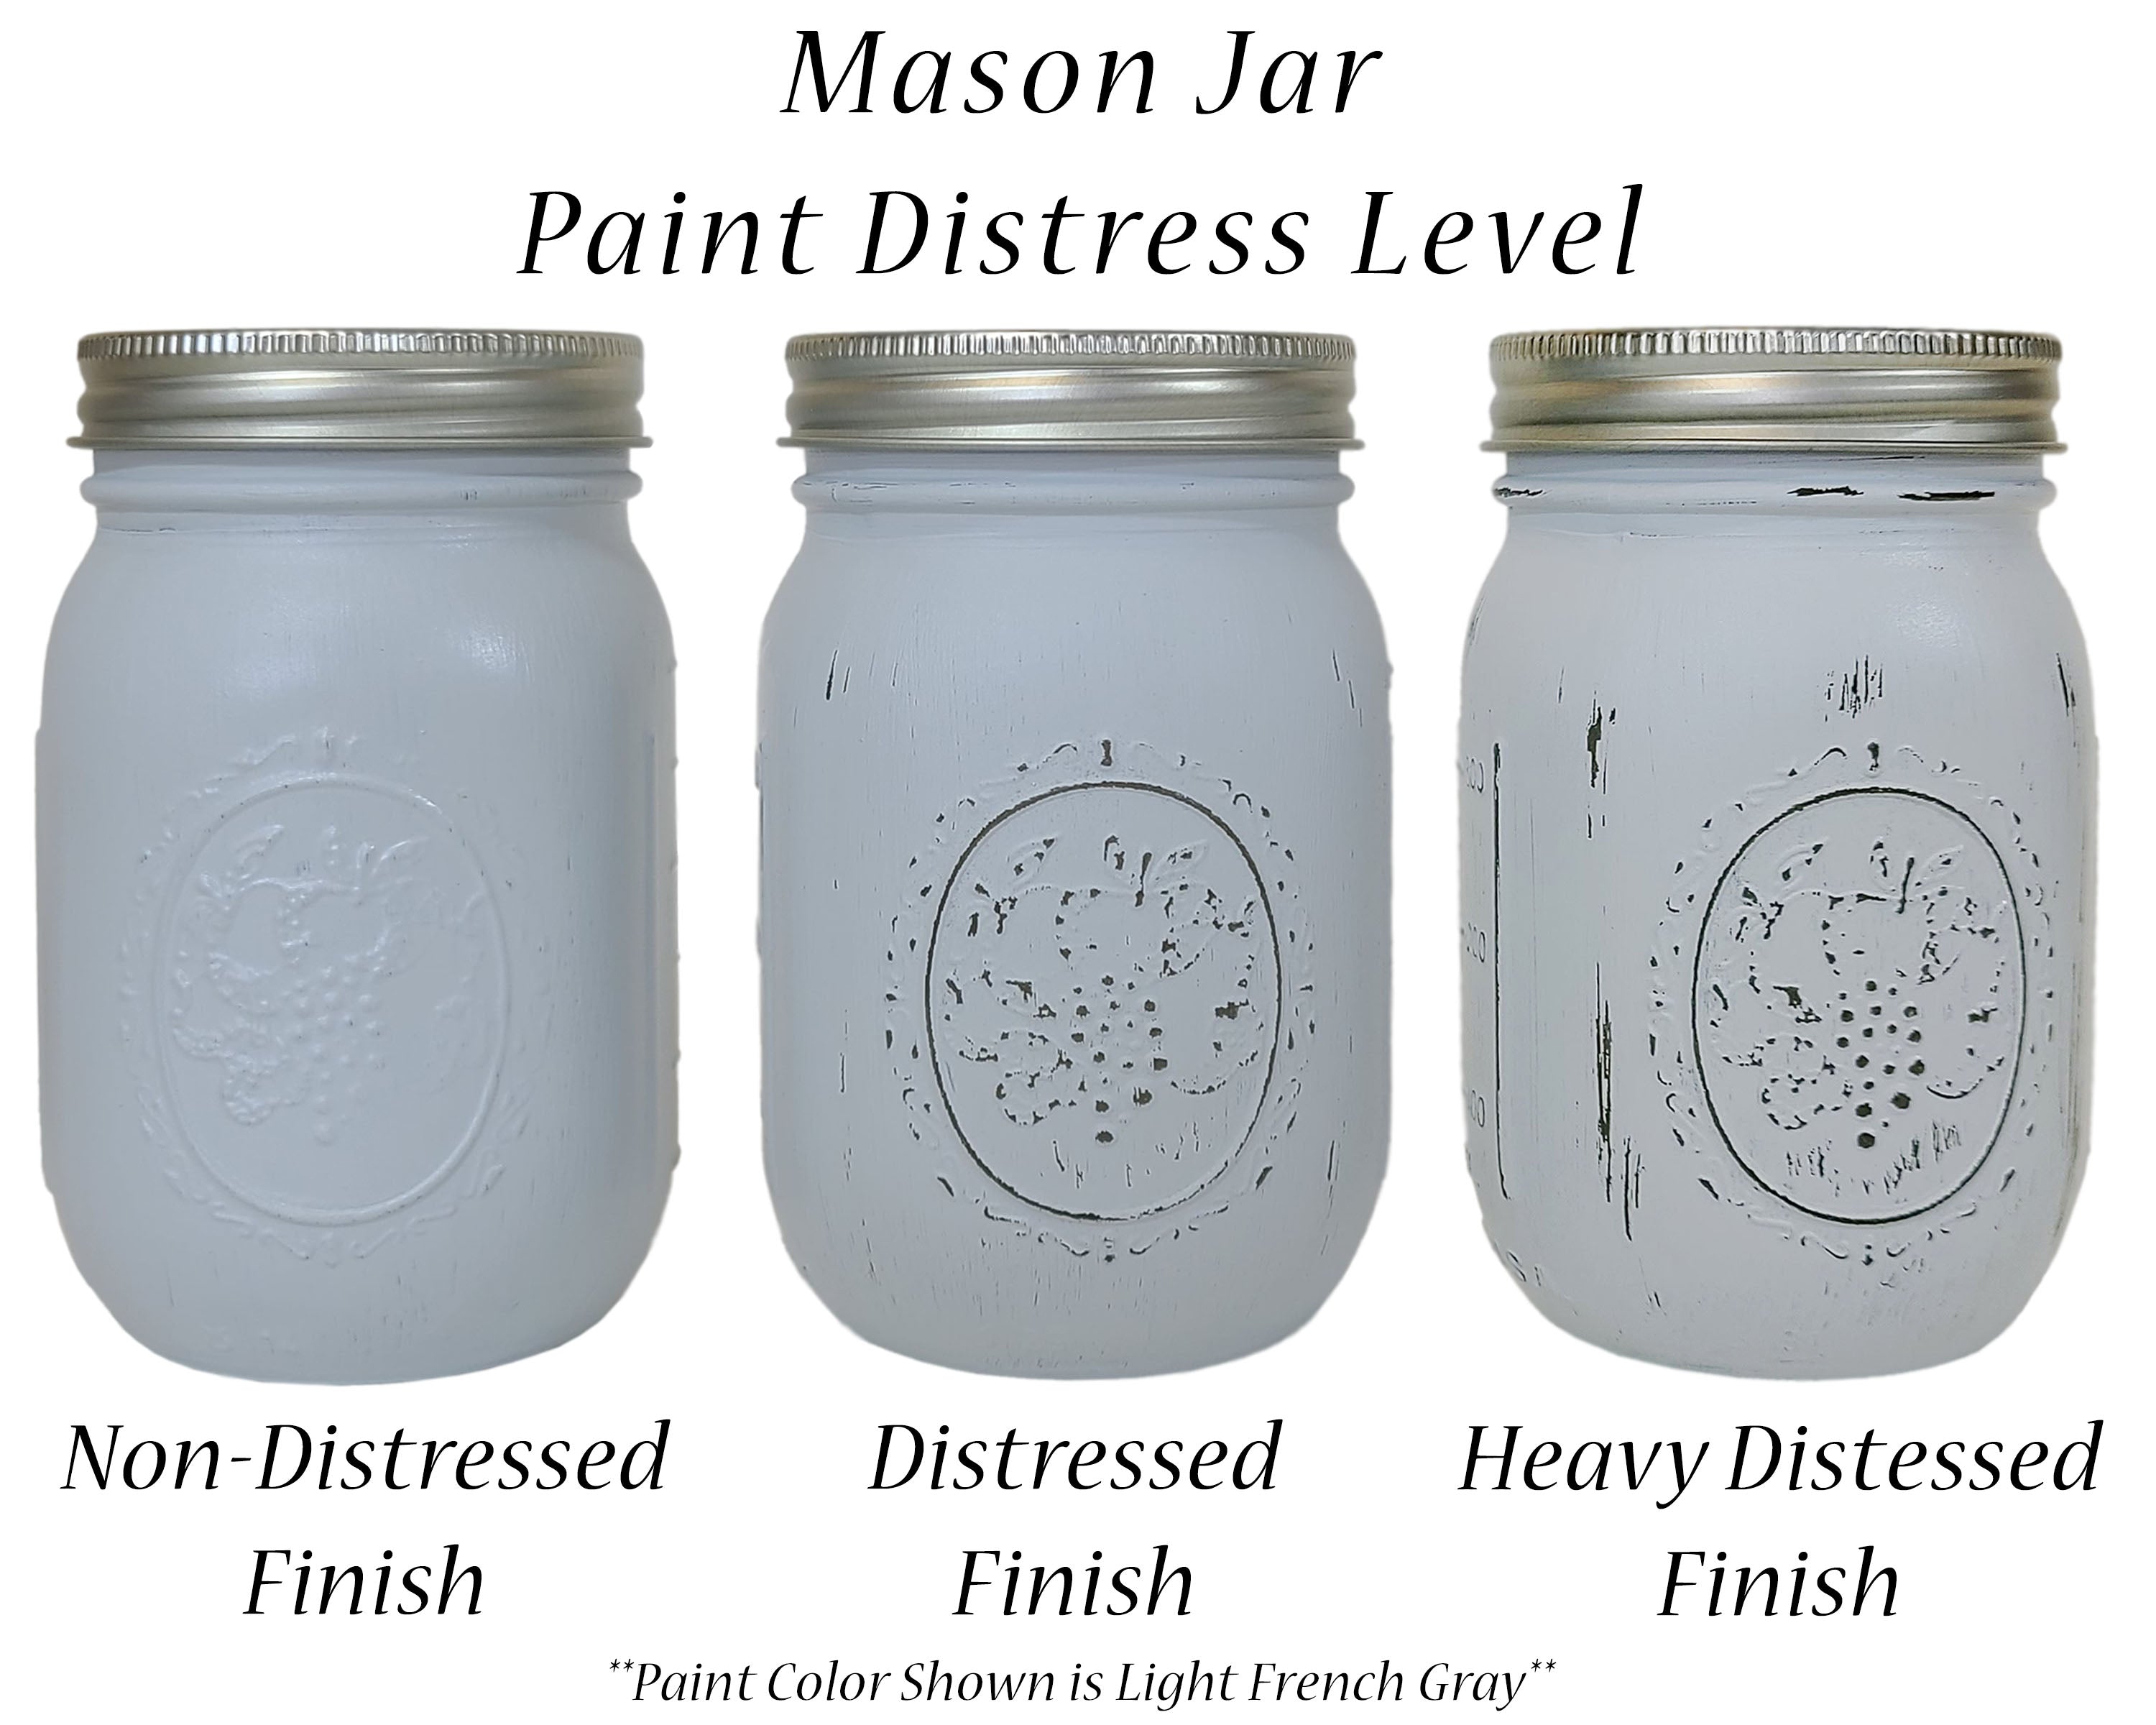 Painted Mason Jar Distress Level 